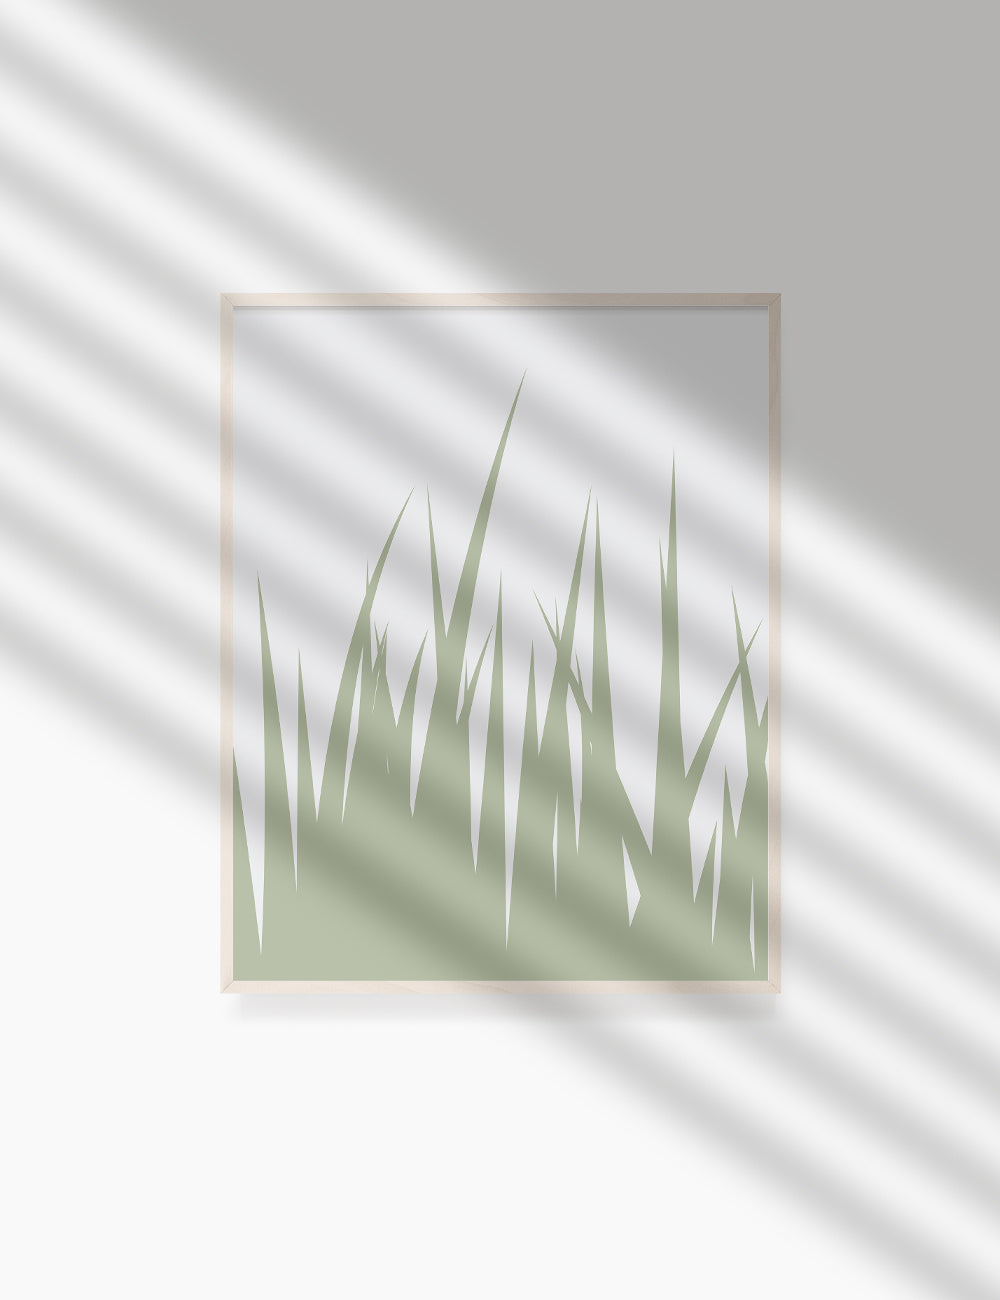 GRASS. MINIMALIST BOTANICAL BOHO ART. GREEN AND BEIGE. Minimal Aesthetic. Clean Design. Printable Wall Art Illustration. - PAPER MOON Art & Design